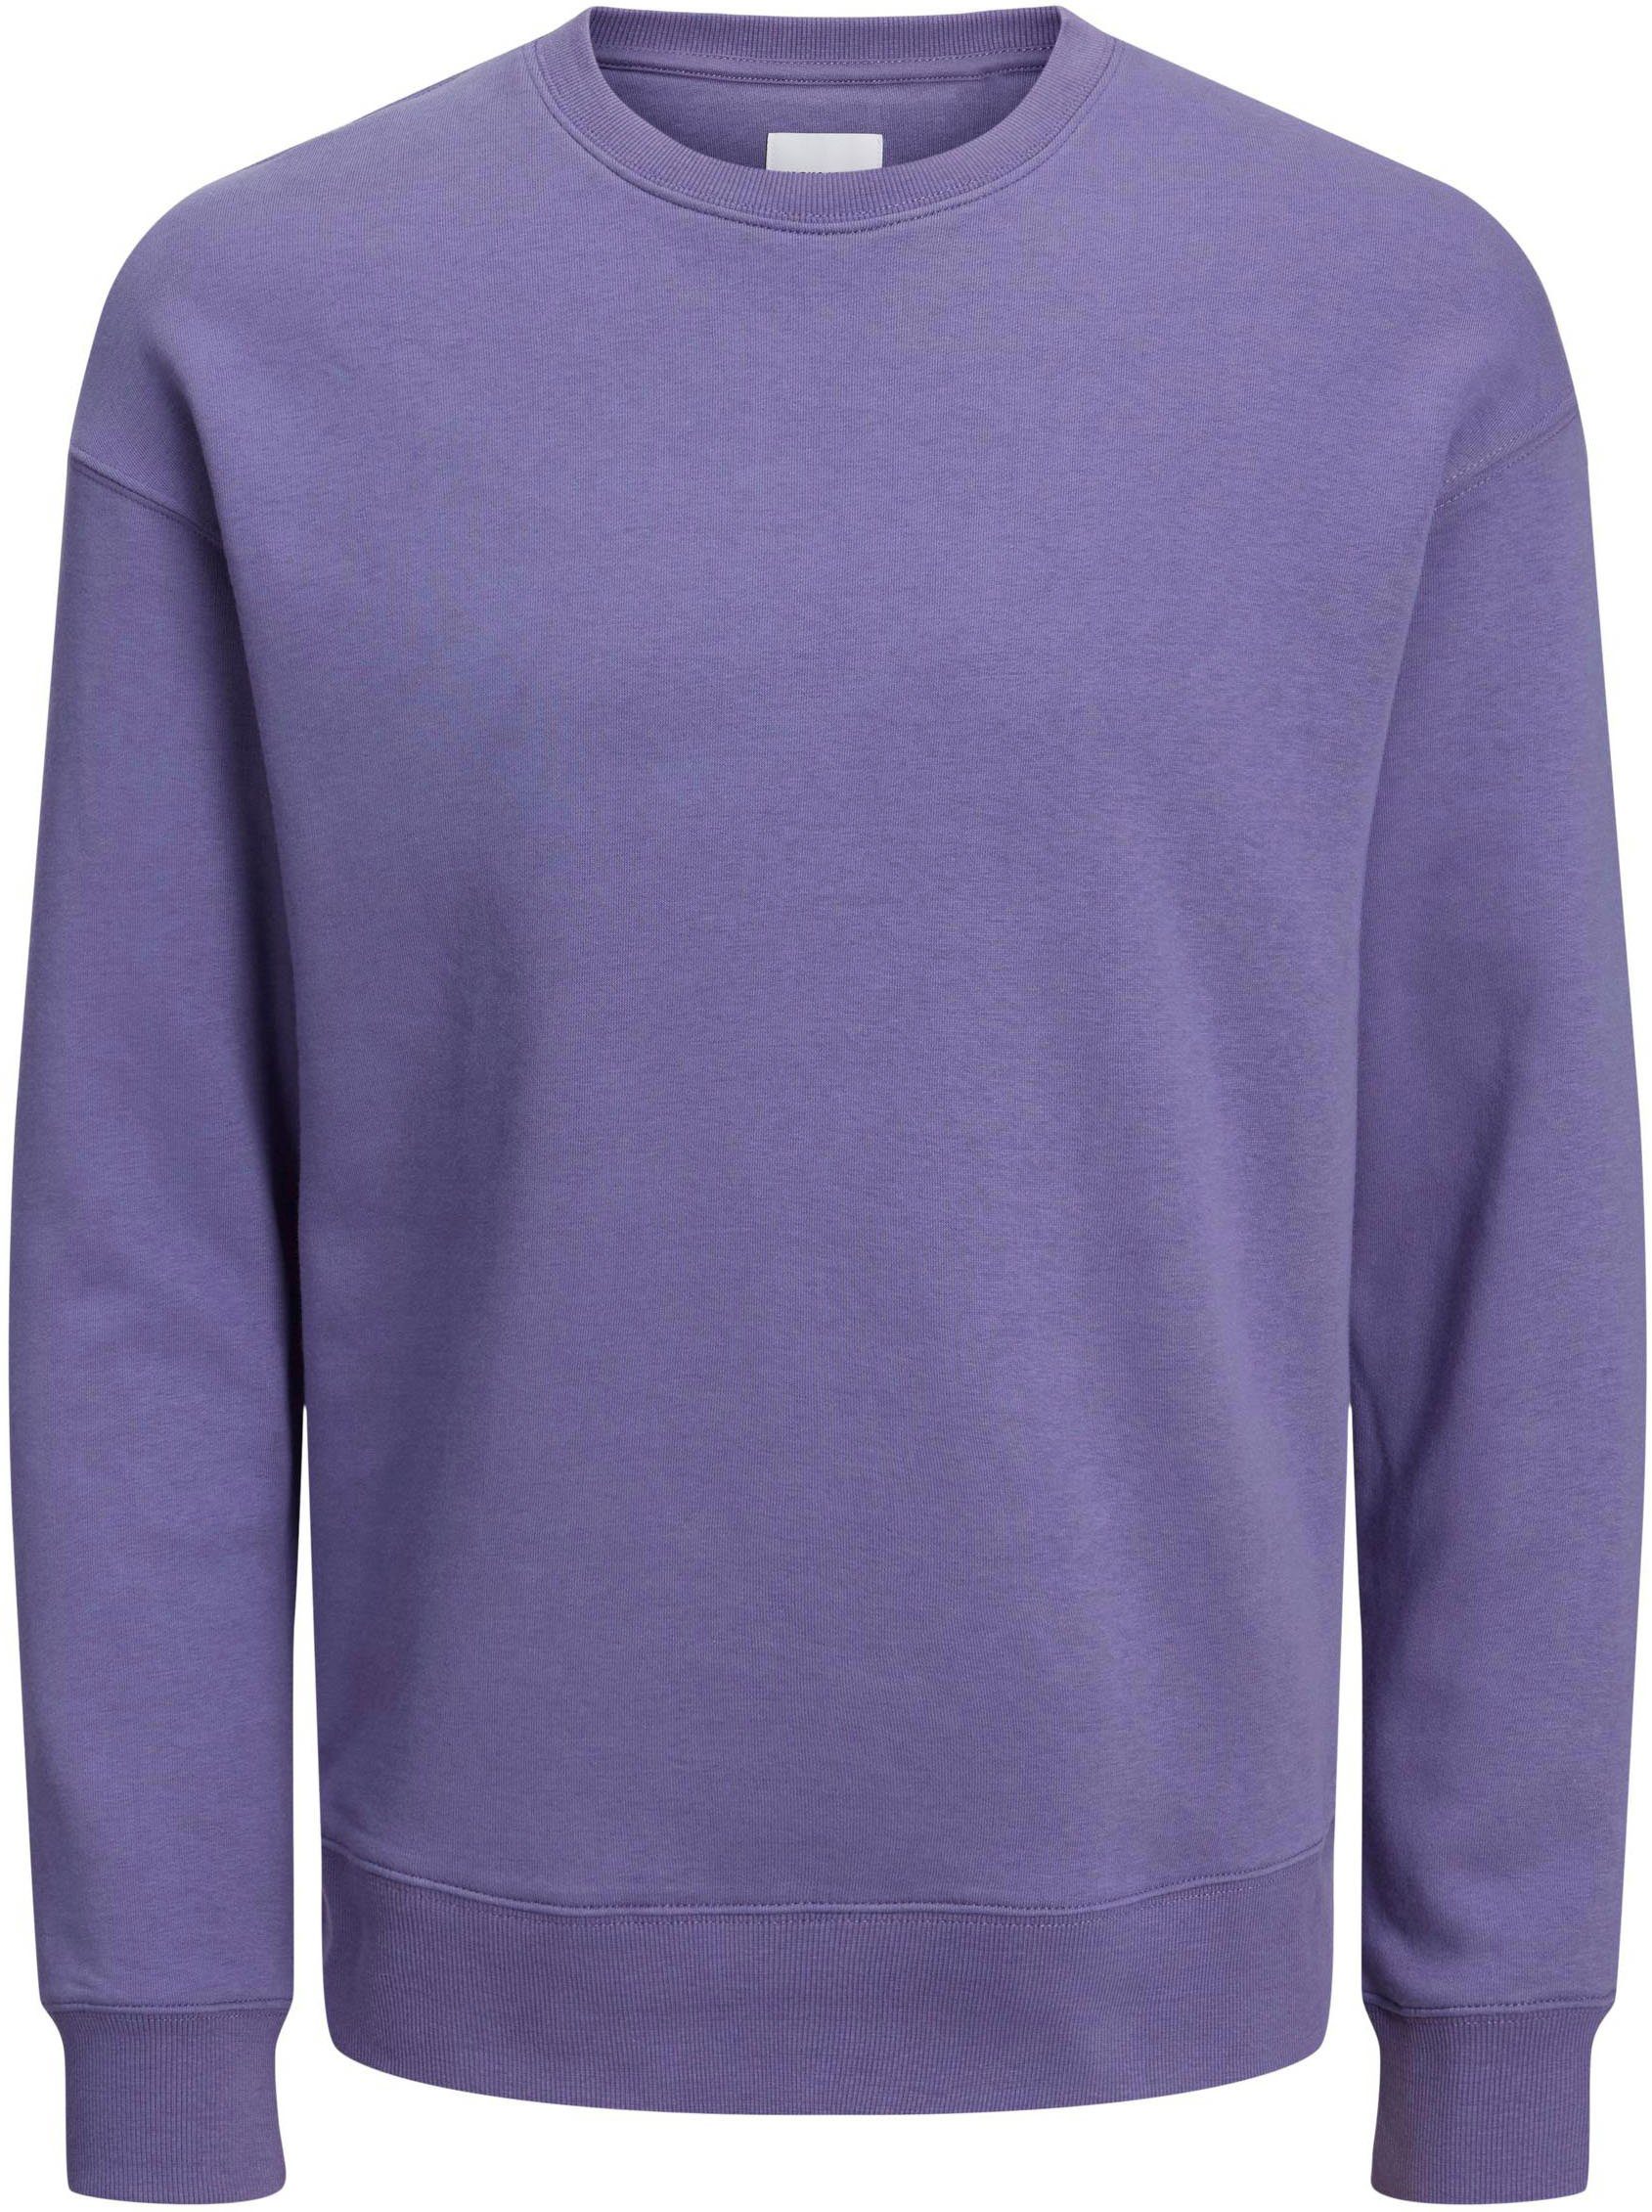 NECK Jack NOOS CREW BASIC Purple & Jones SWEAT JJESTAR Sweatshirt Twilight